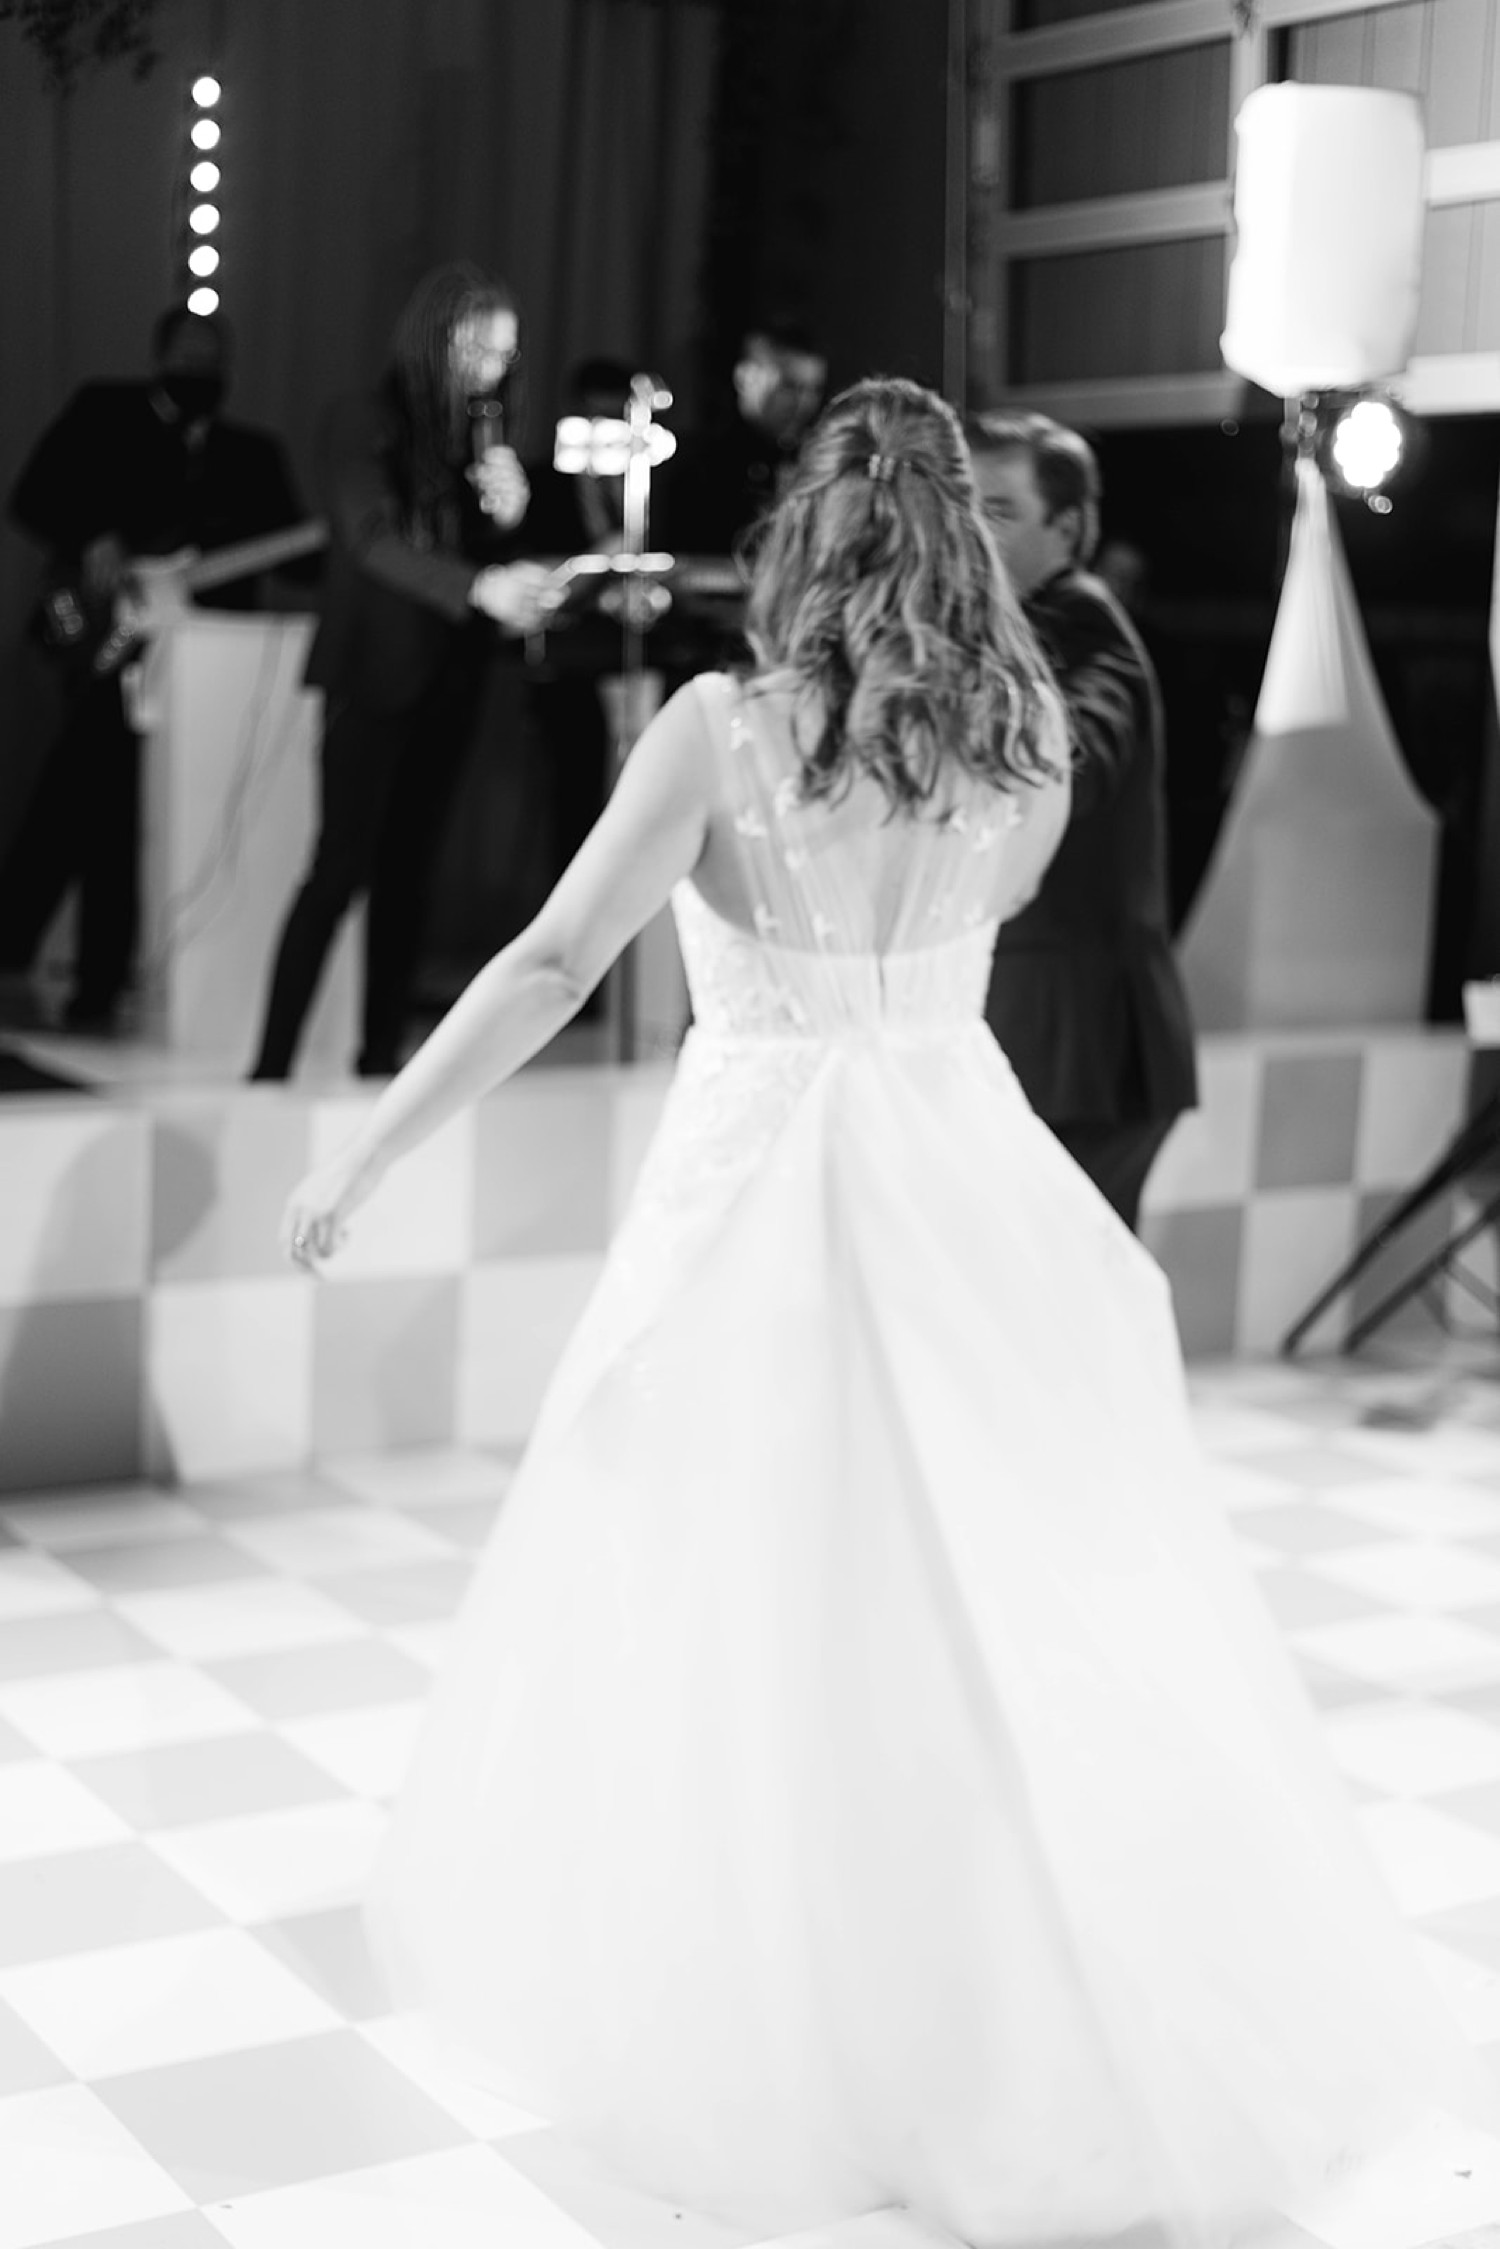 Checkered Wedding Dance Floor